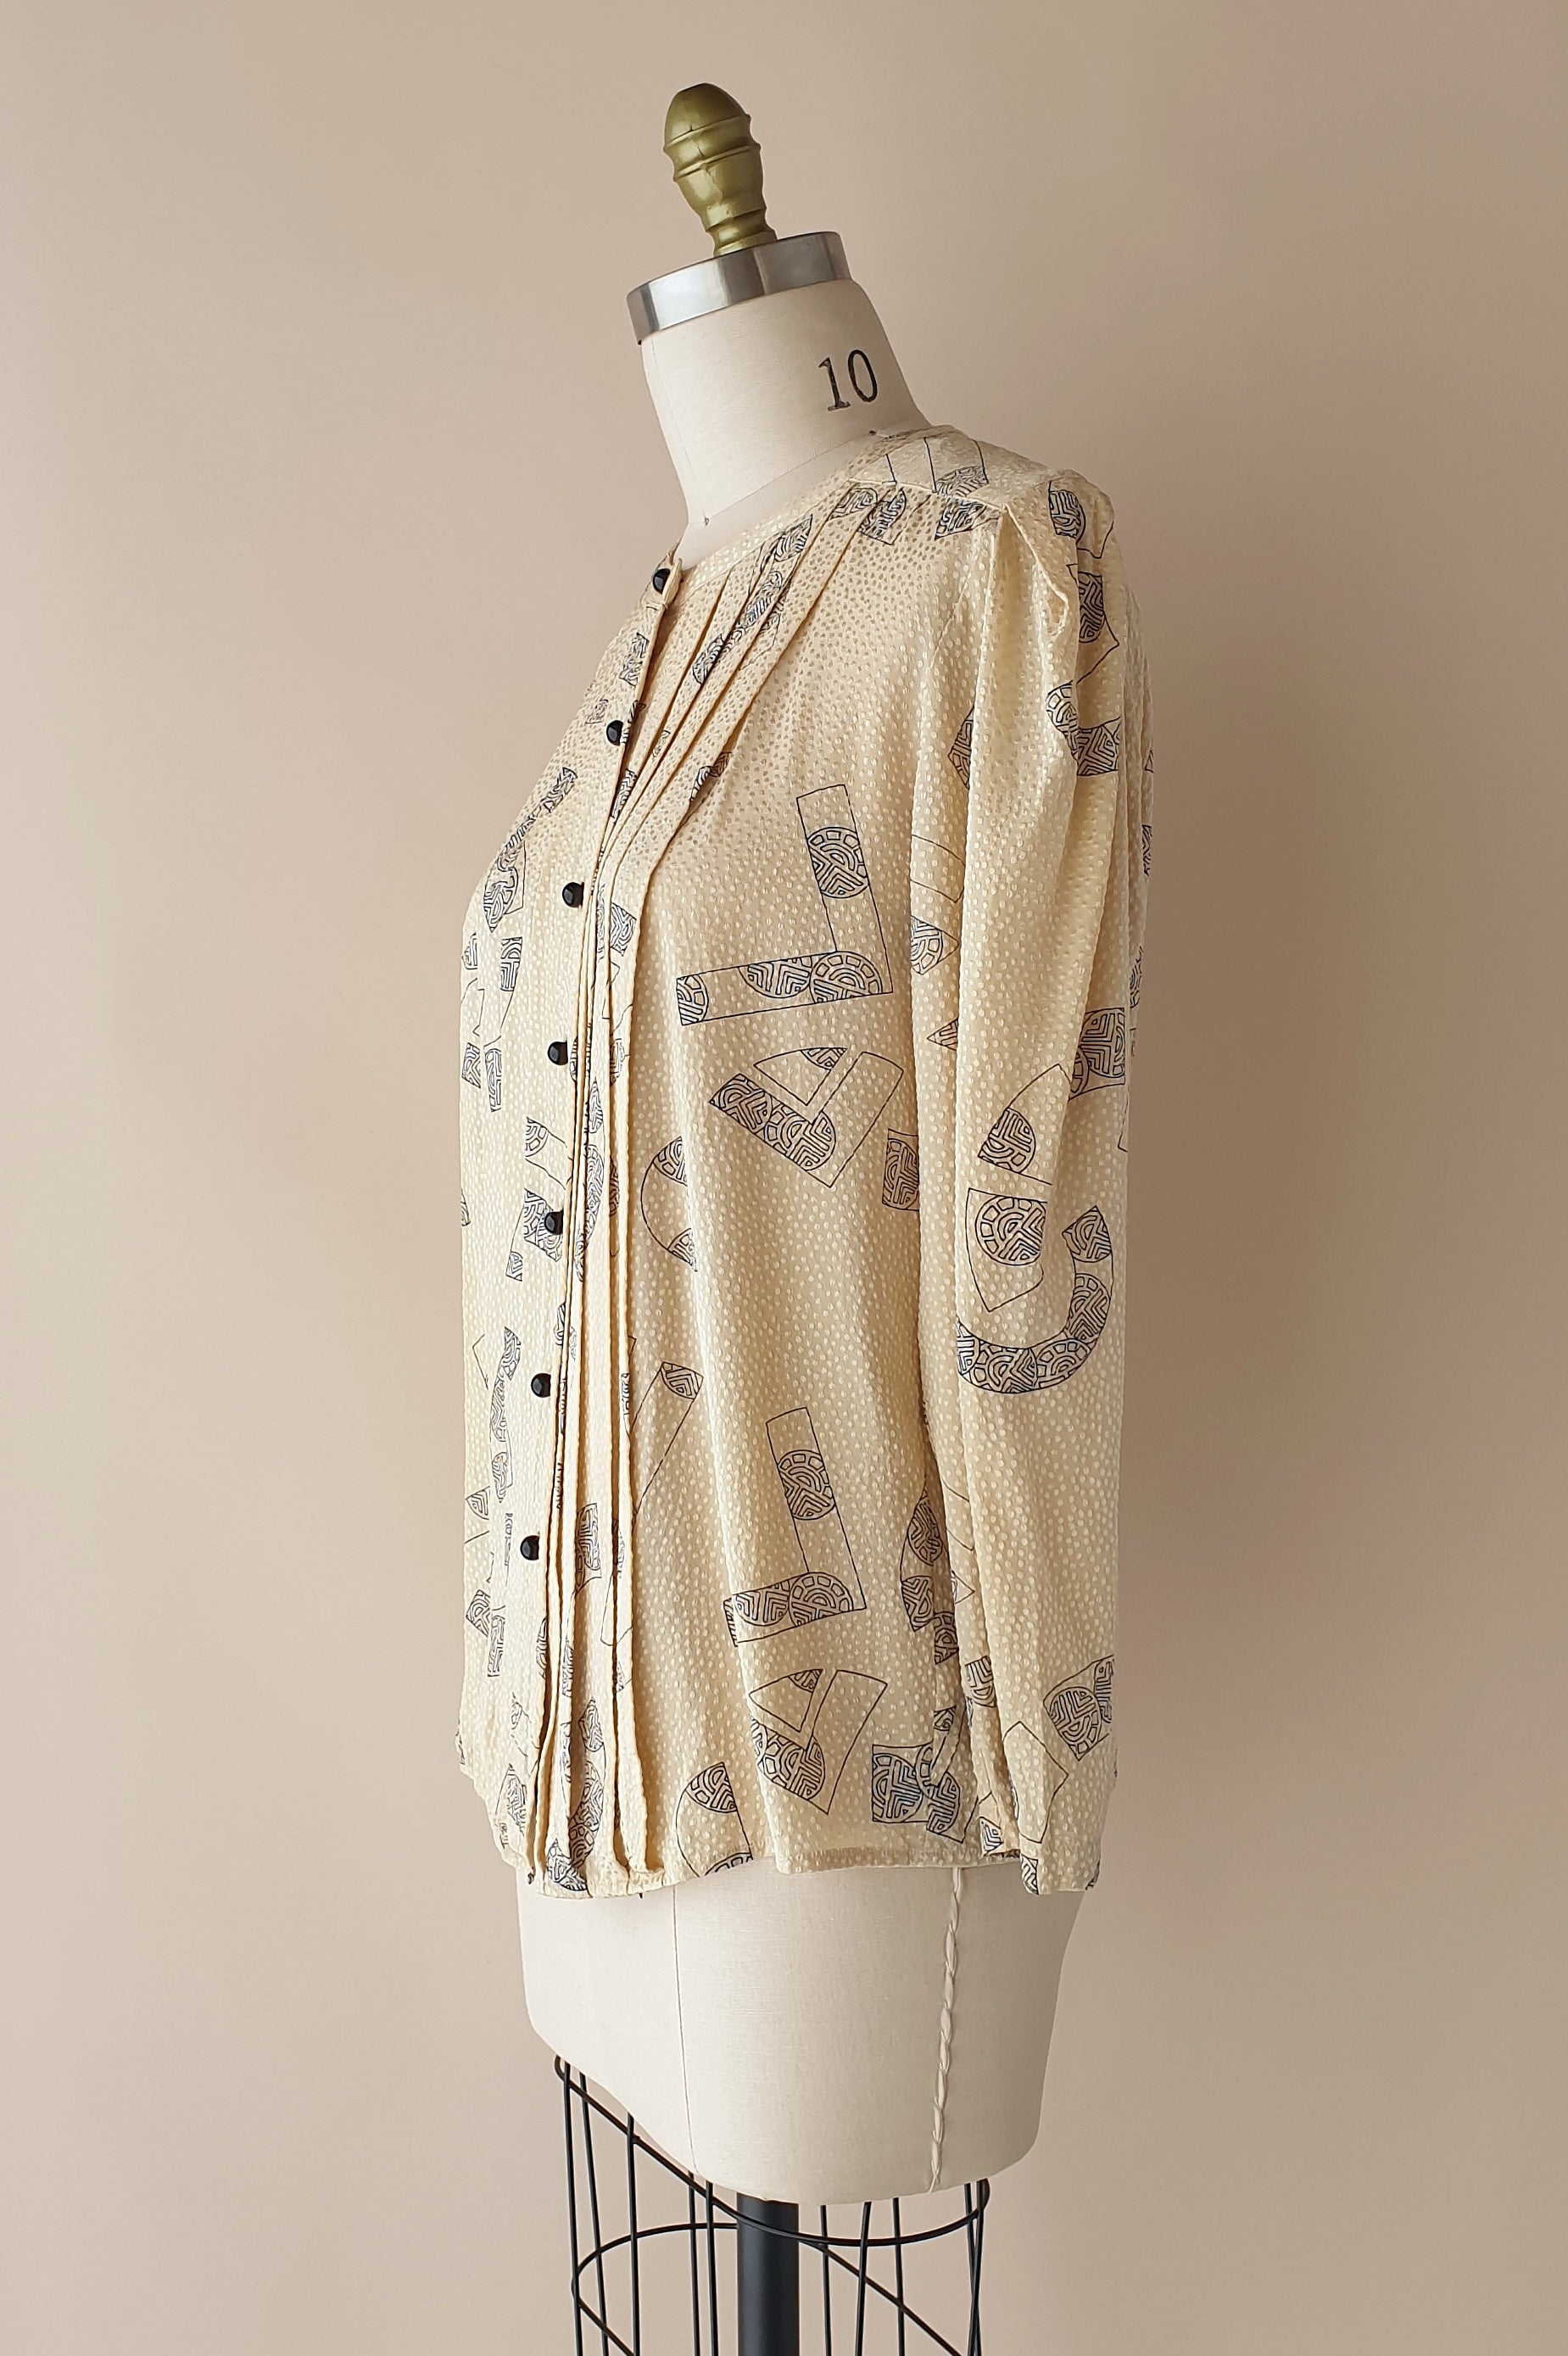 Louis Feraud 100% Silk Vintage Shirt -  Israel